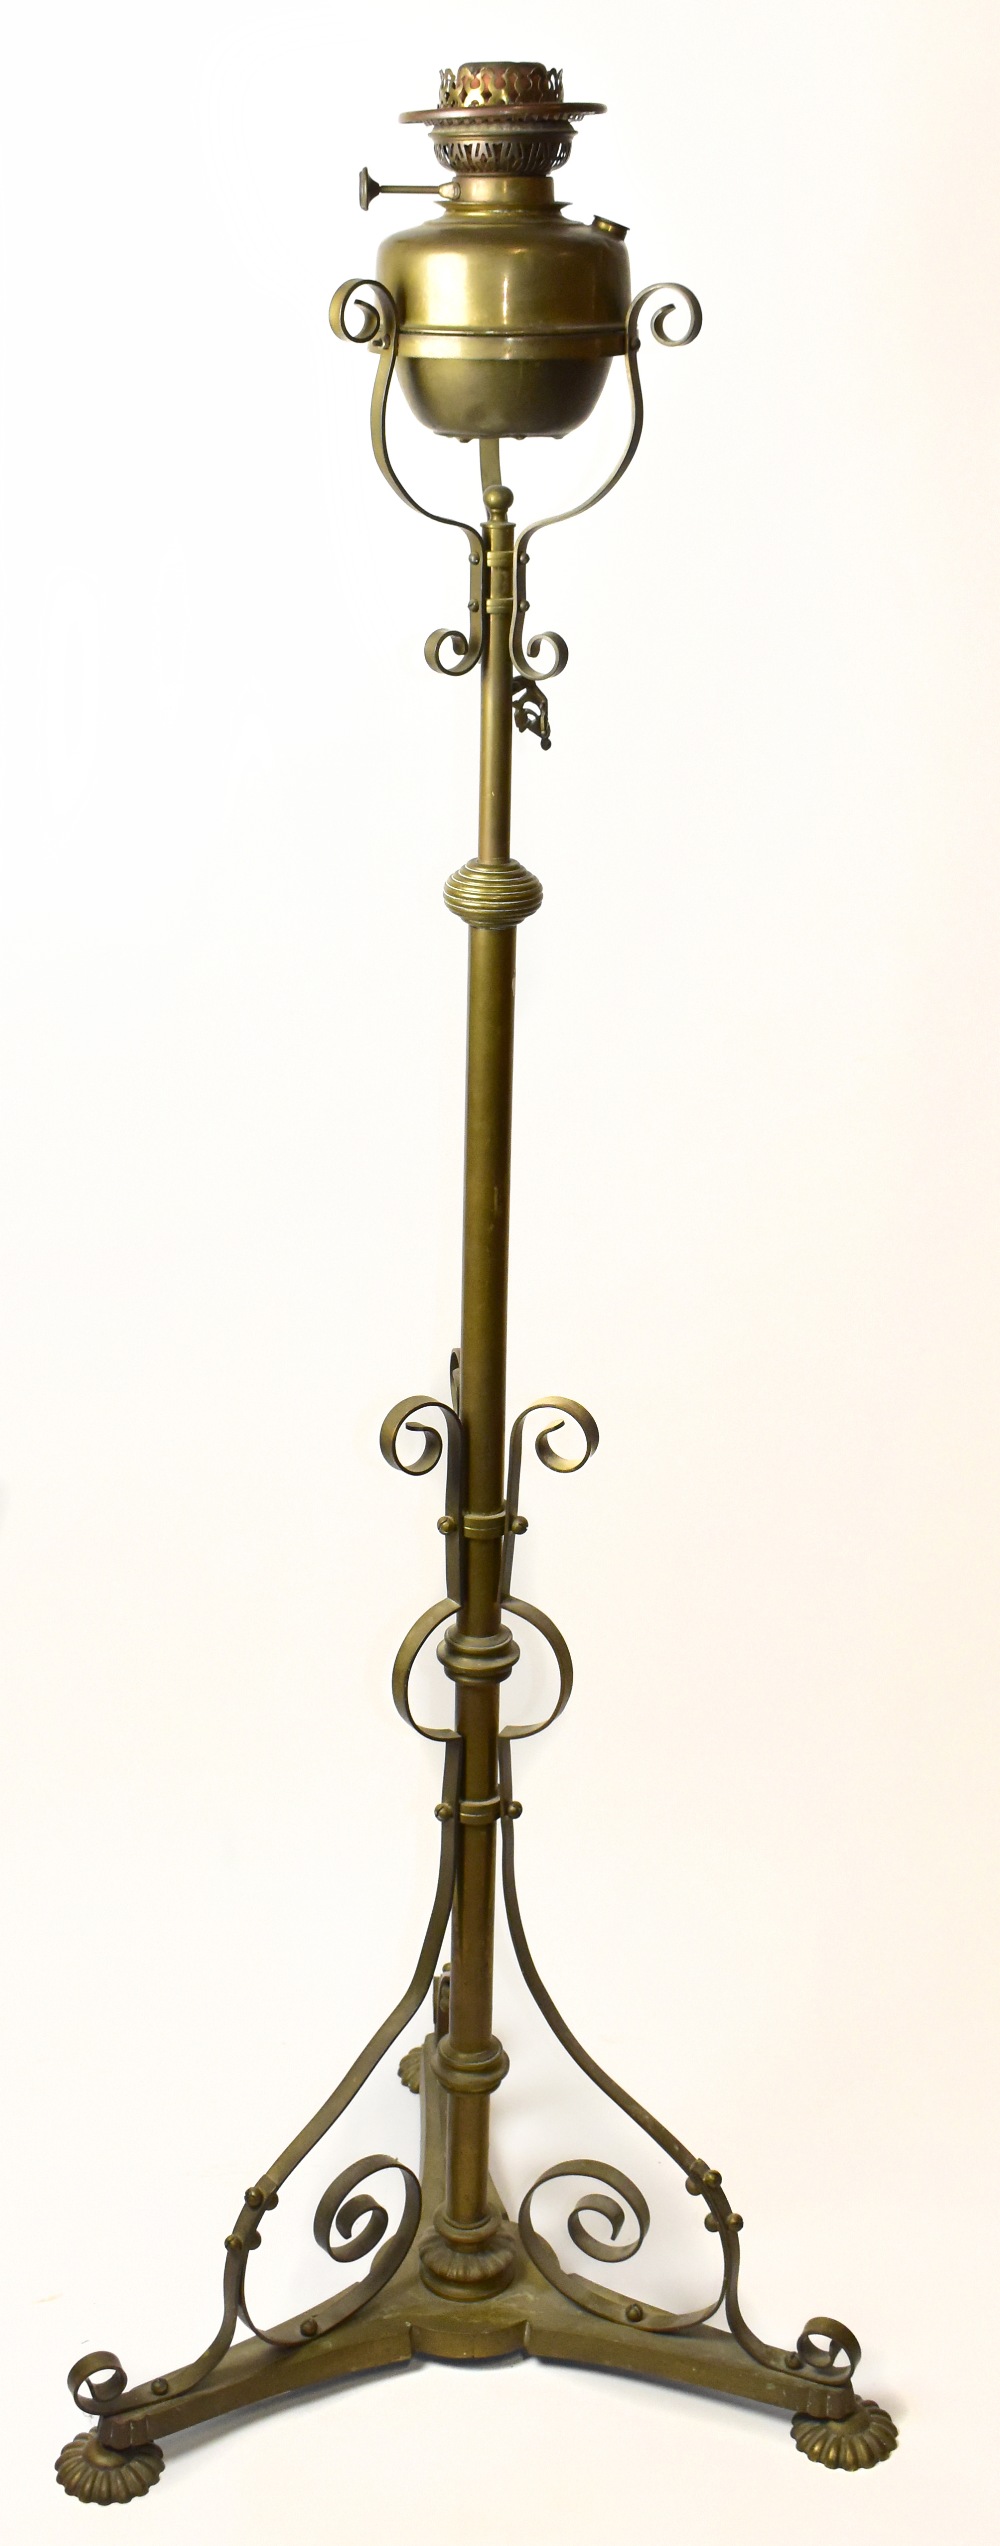 A late 19th century brass adjustable telescopic standard oil lamp.